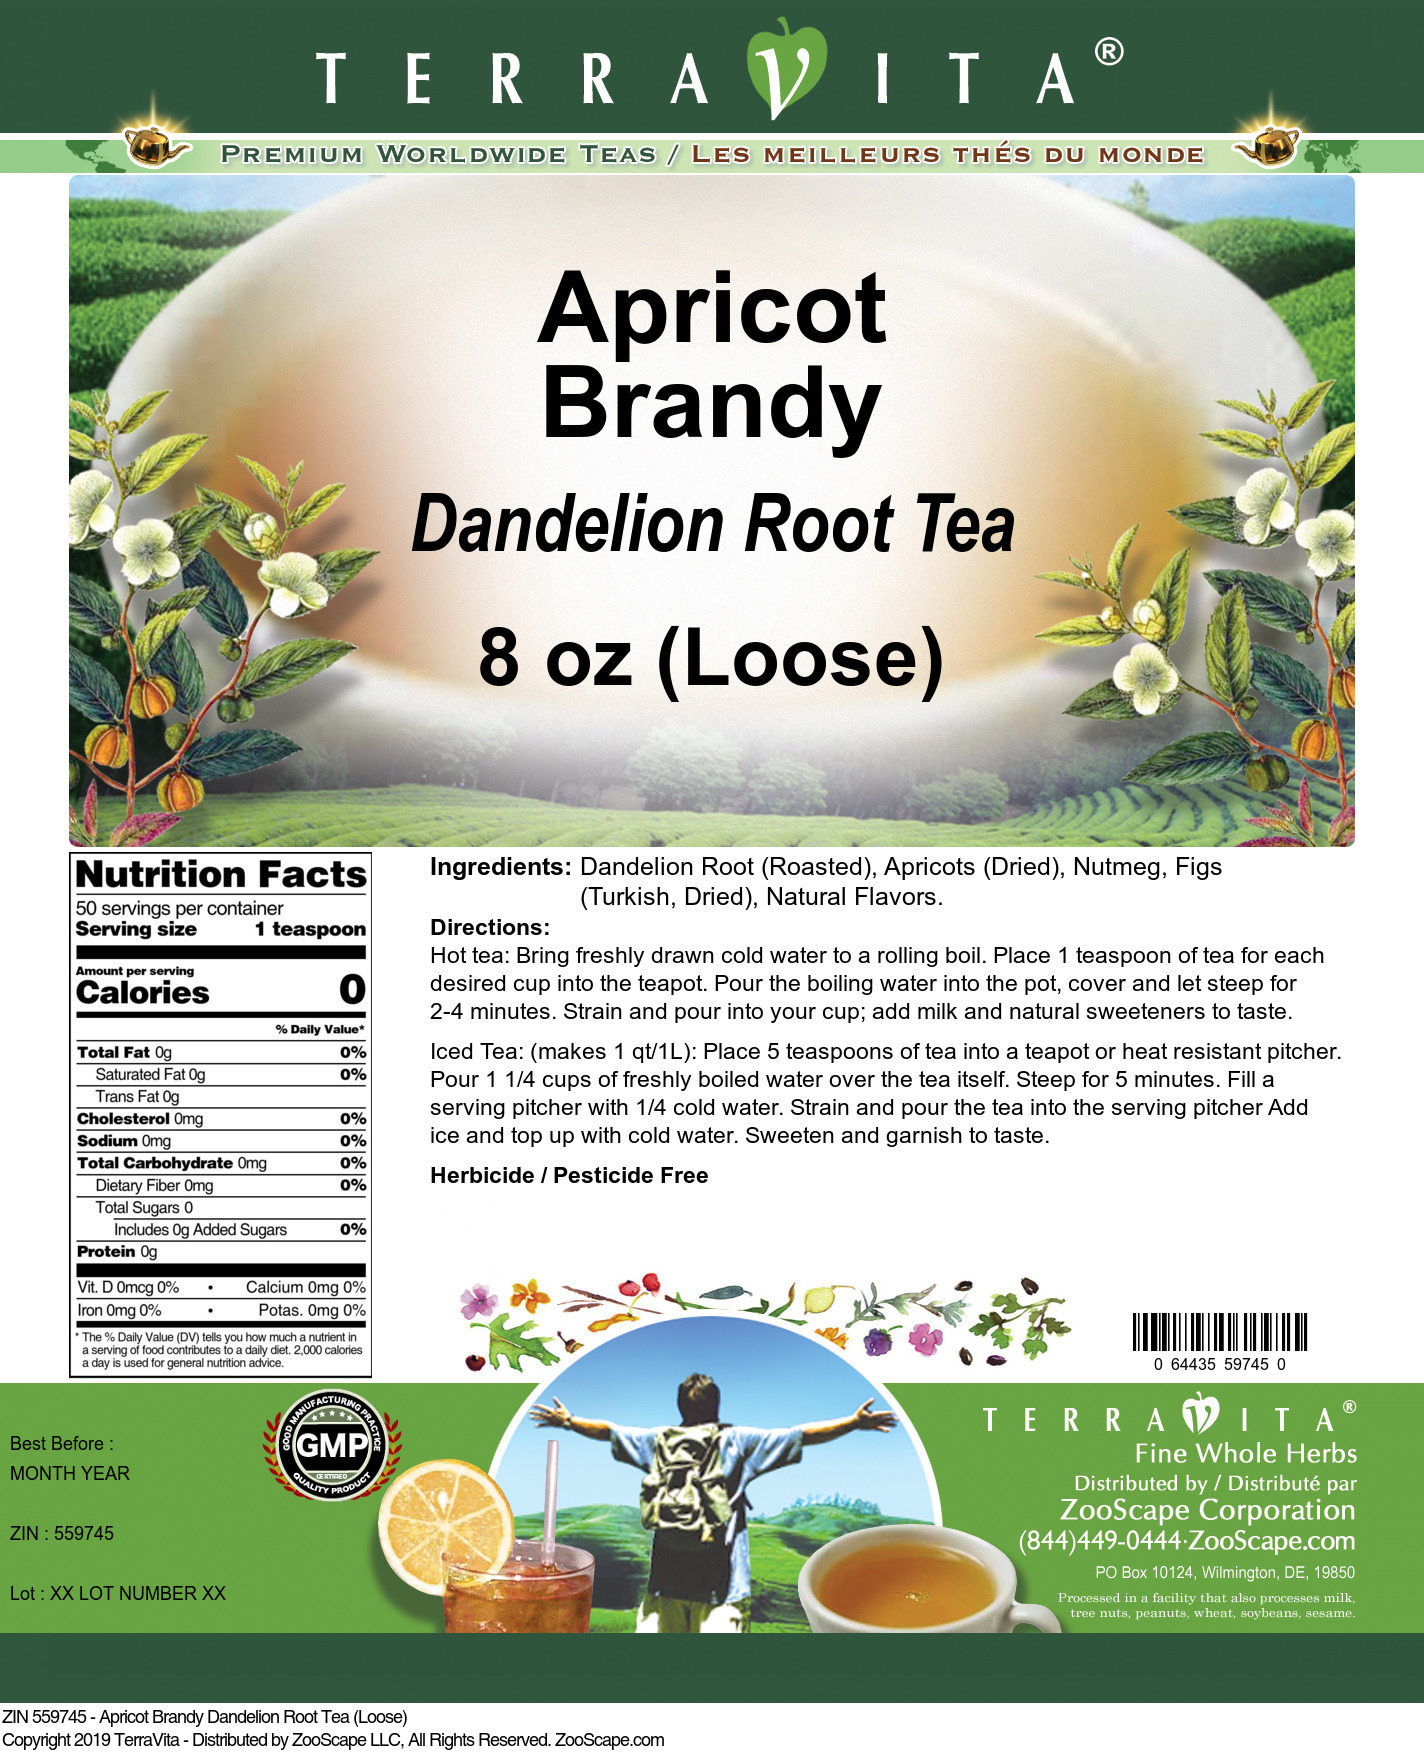 Apricot Brandy Dandelion Root Tea (Loose) - Label